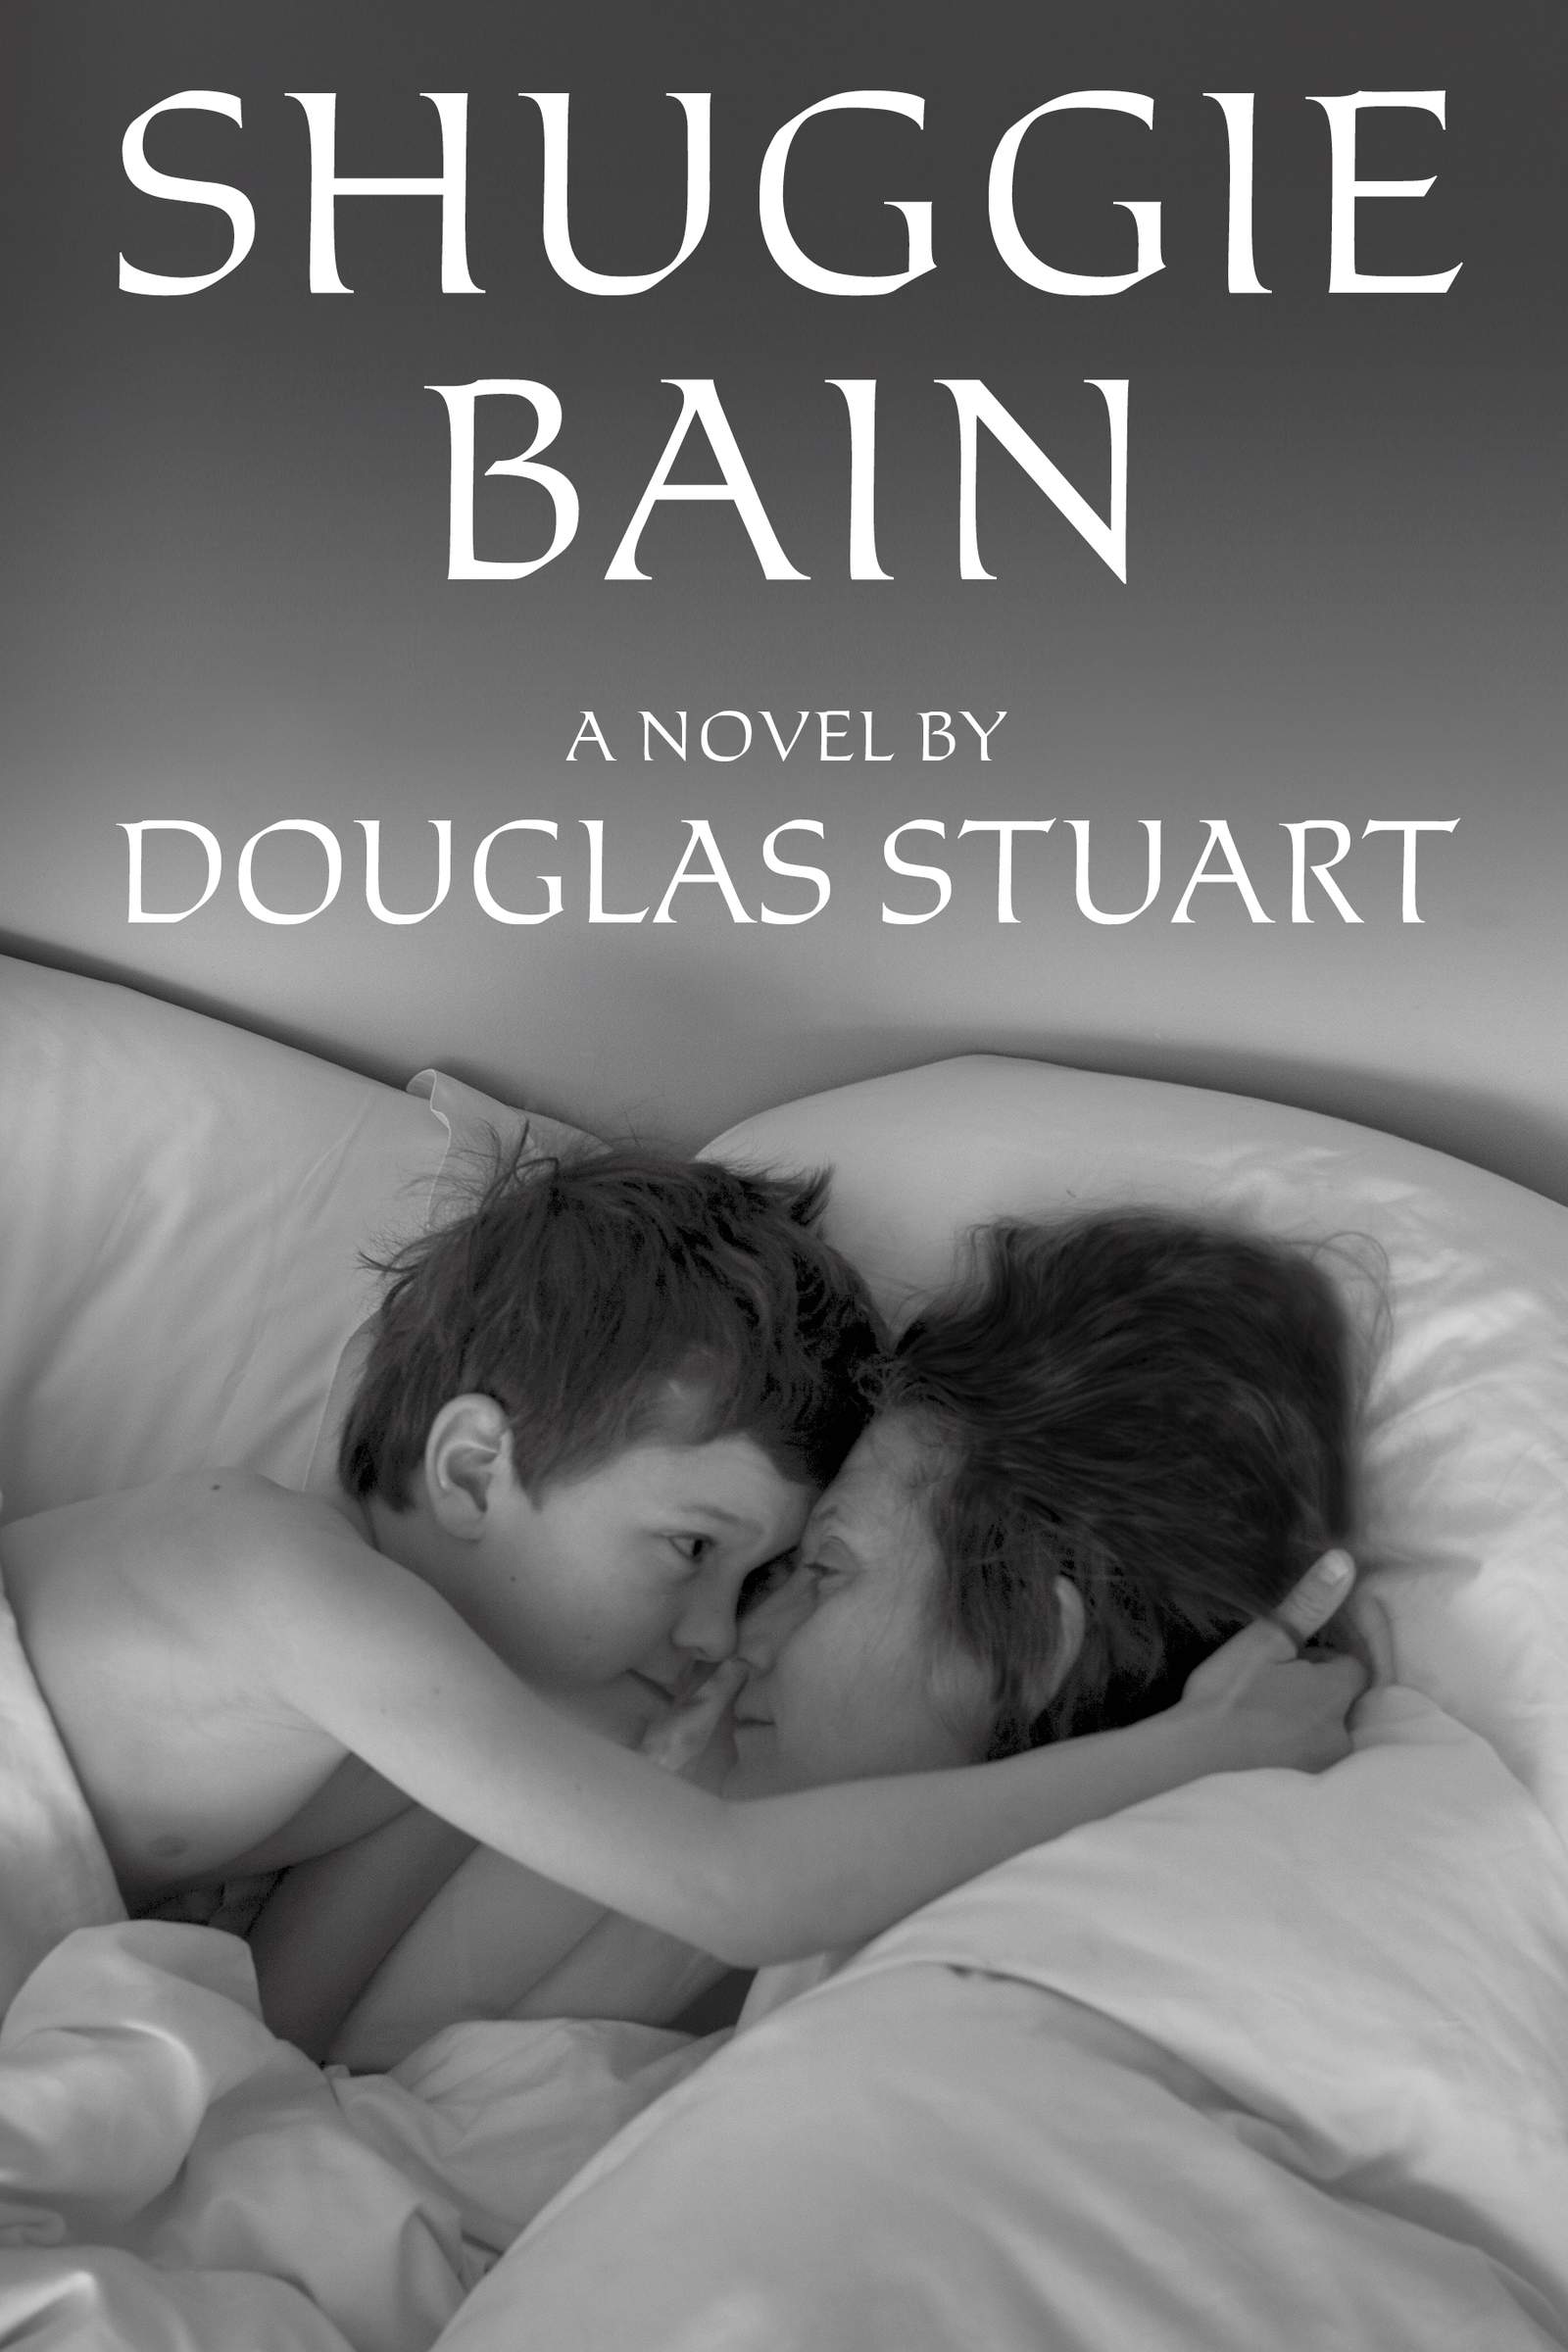 'Shuggie Bain' writer Douglas Stuart wins Booker Prize